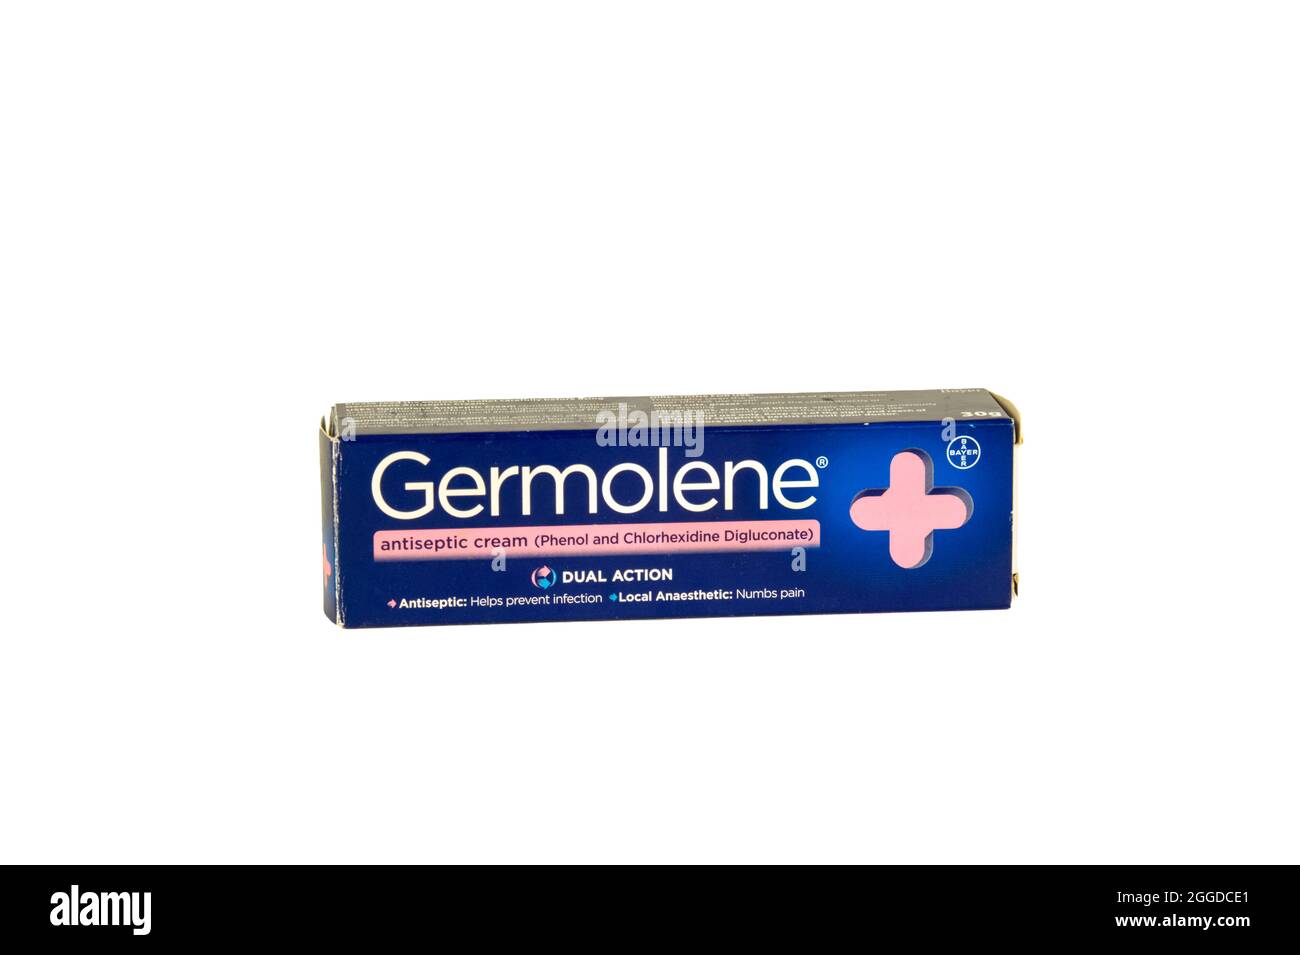 A packet of Germolene antiseptic cream. Stock Photo